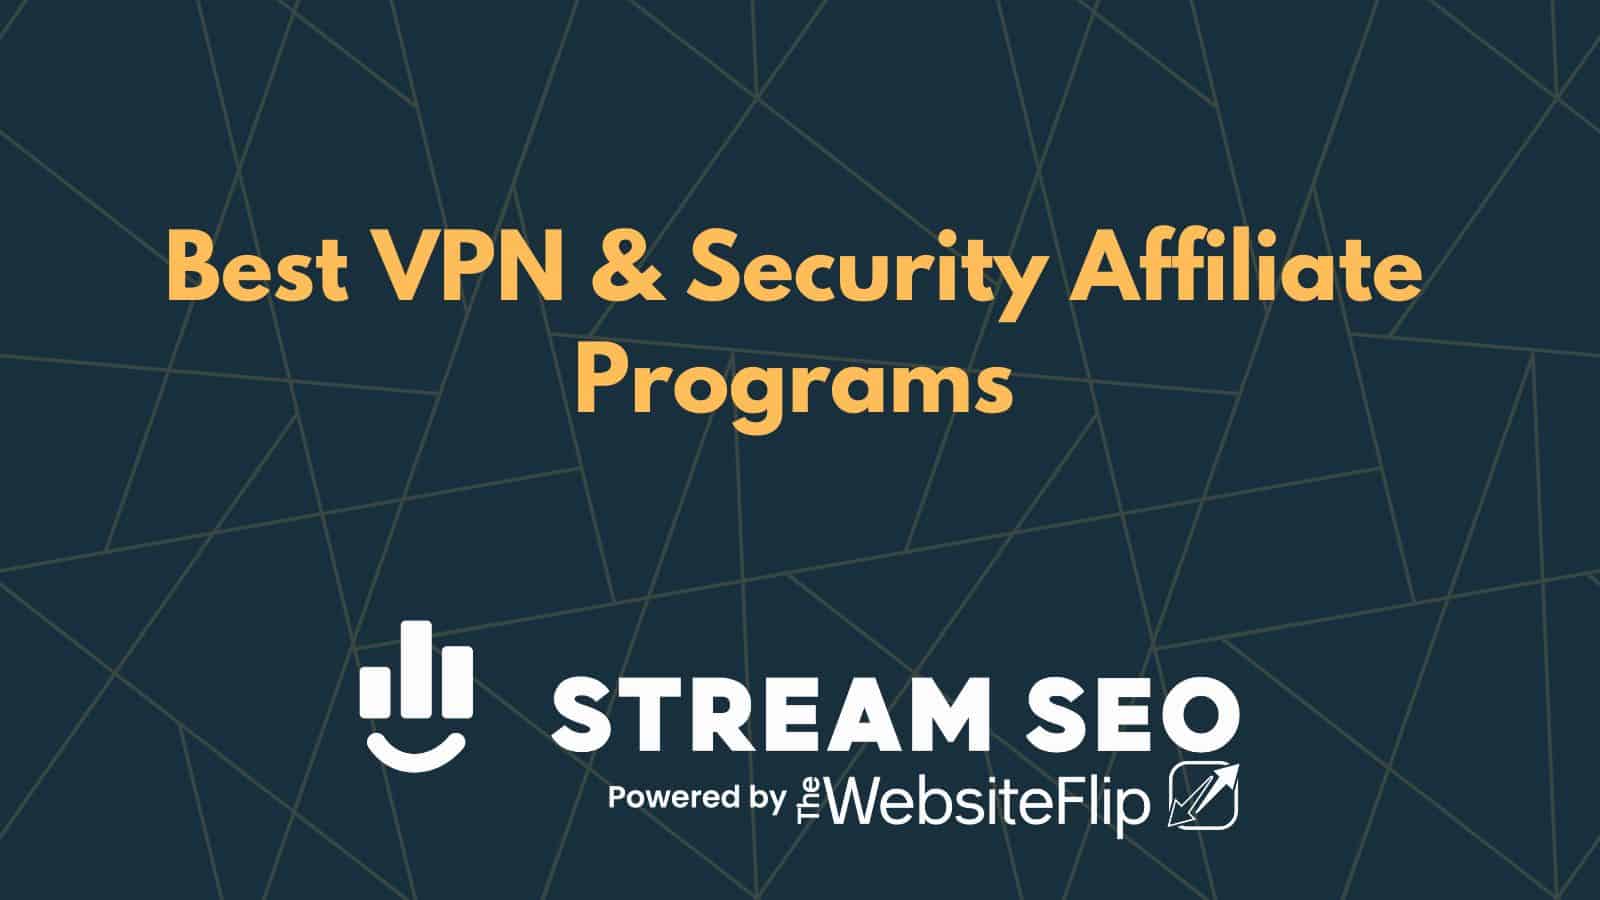 7 Best VPN & Security Affiliate Programs